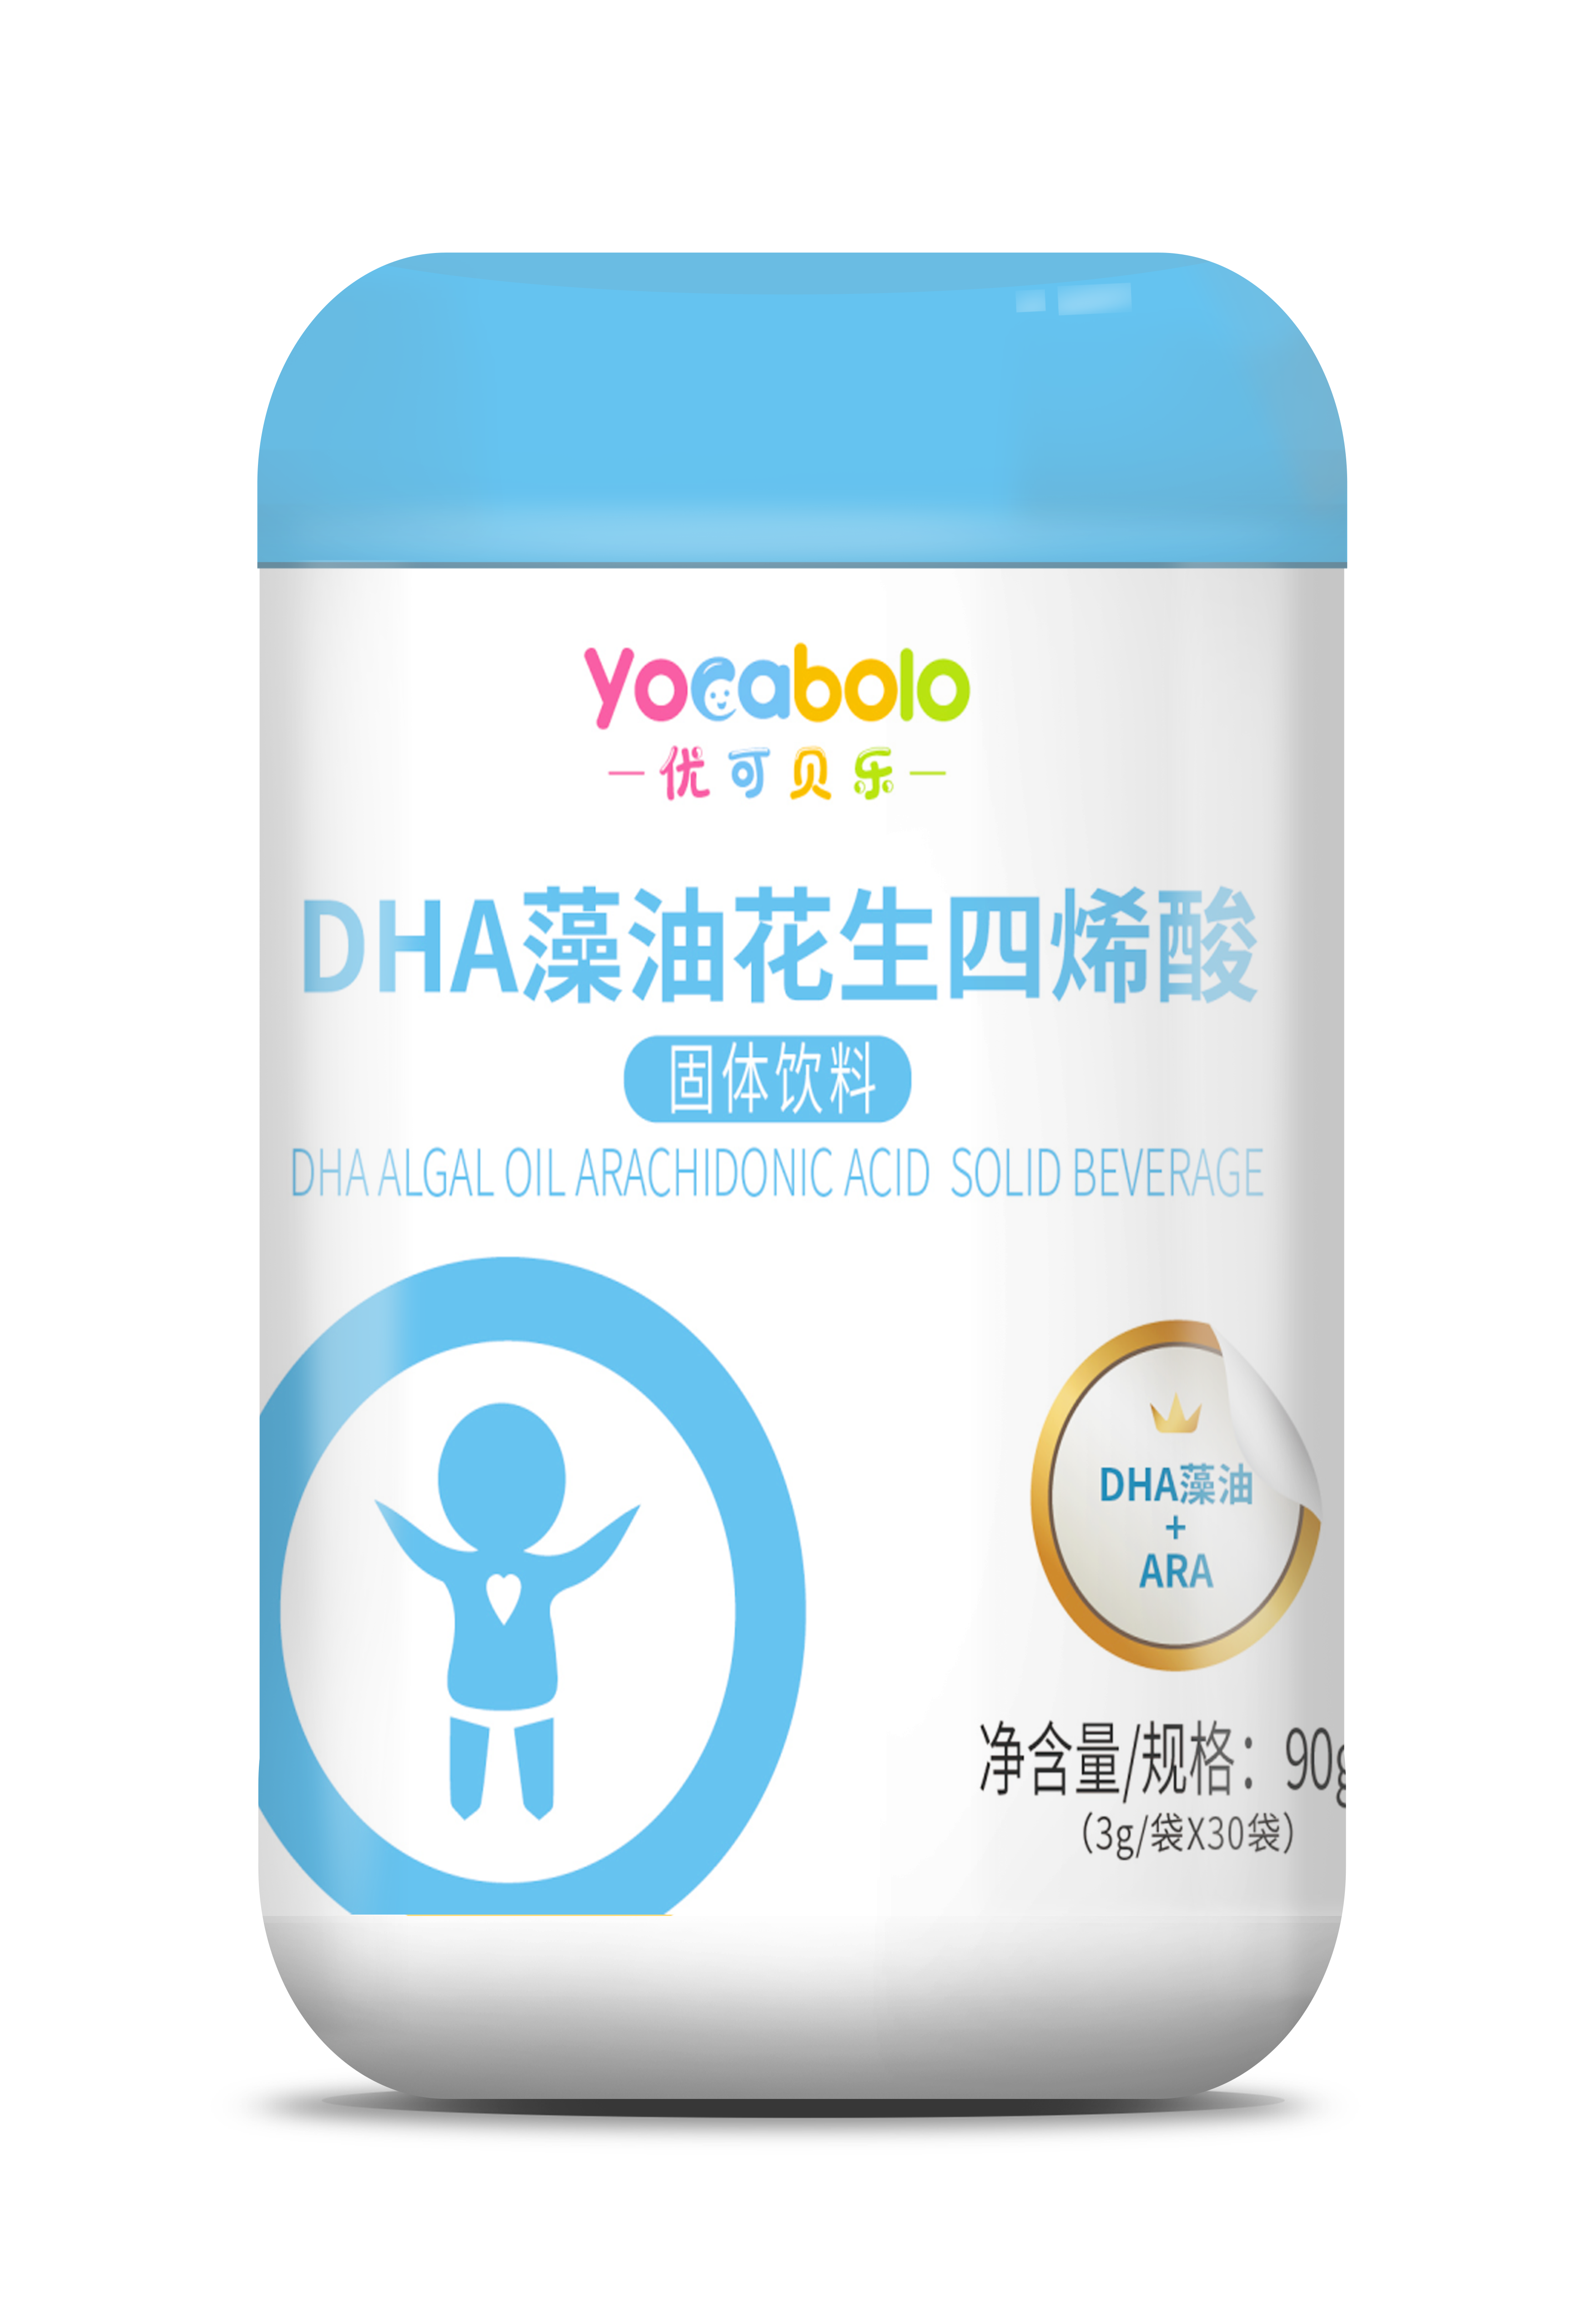 DHA藻油花生四烯酸固体饮料.png